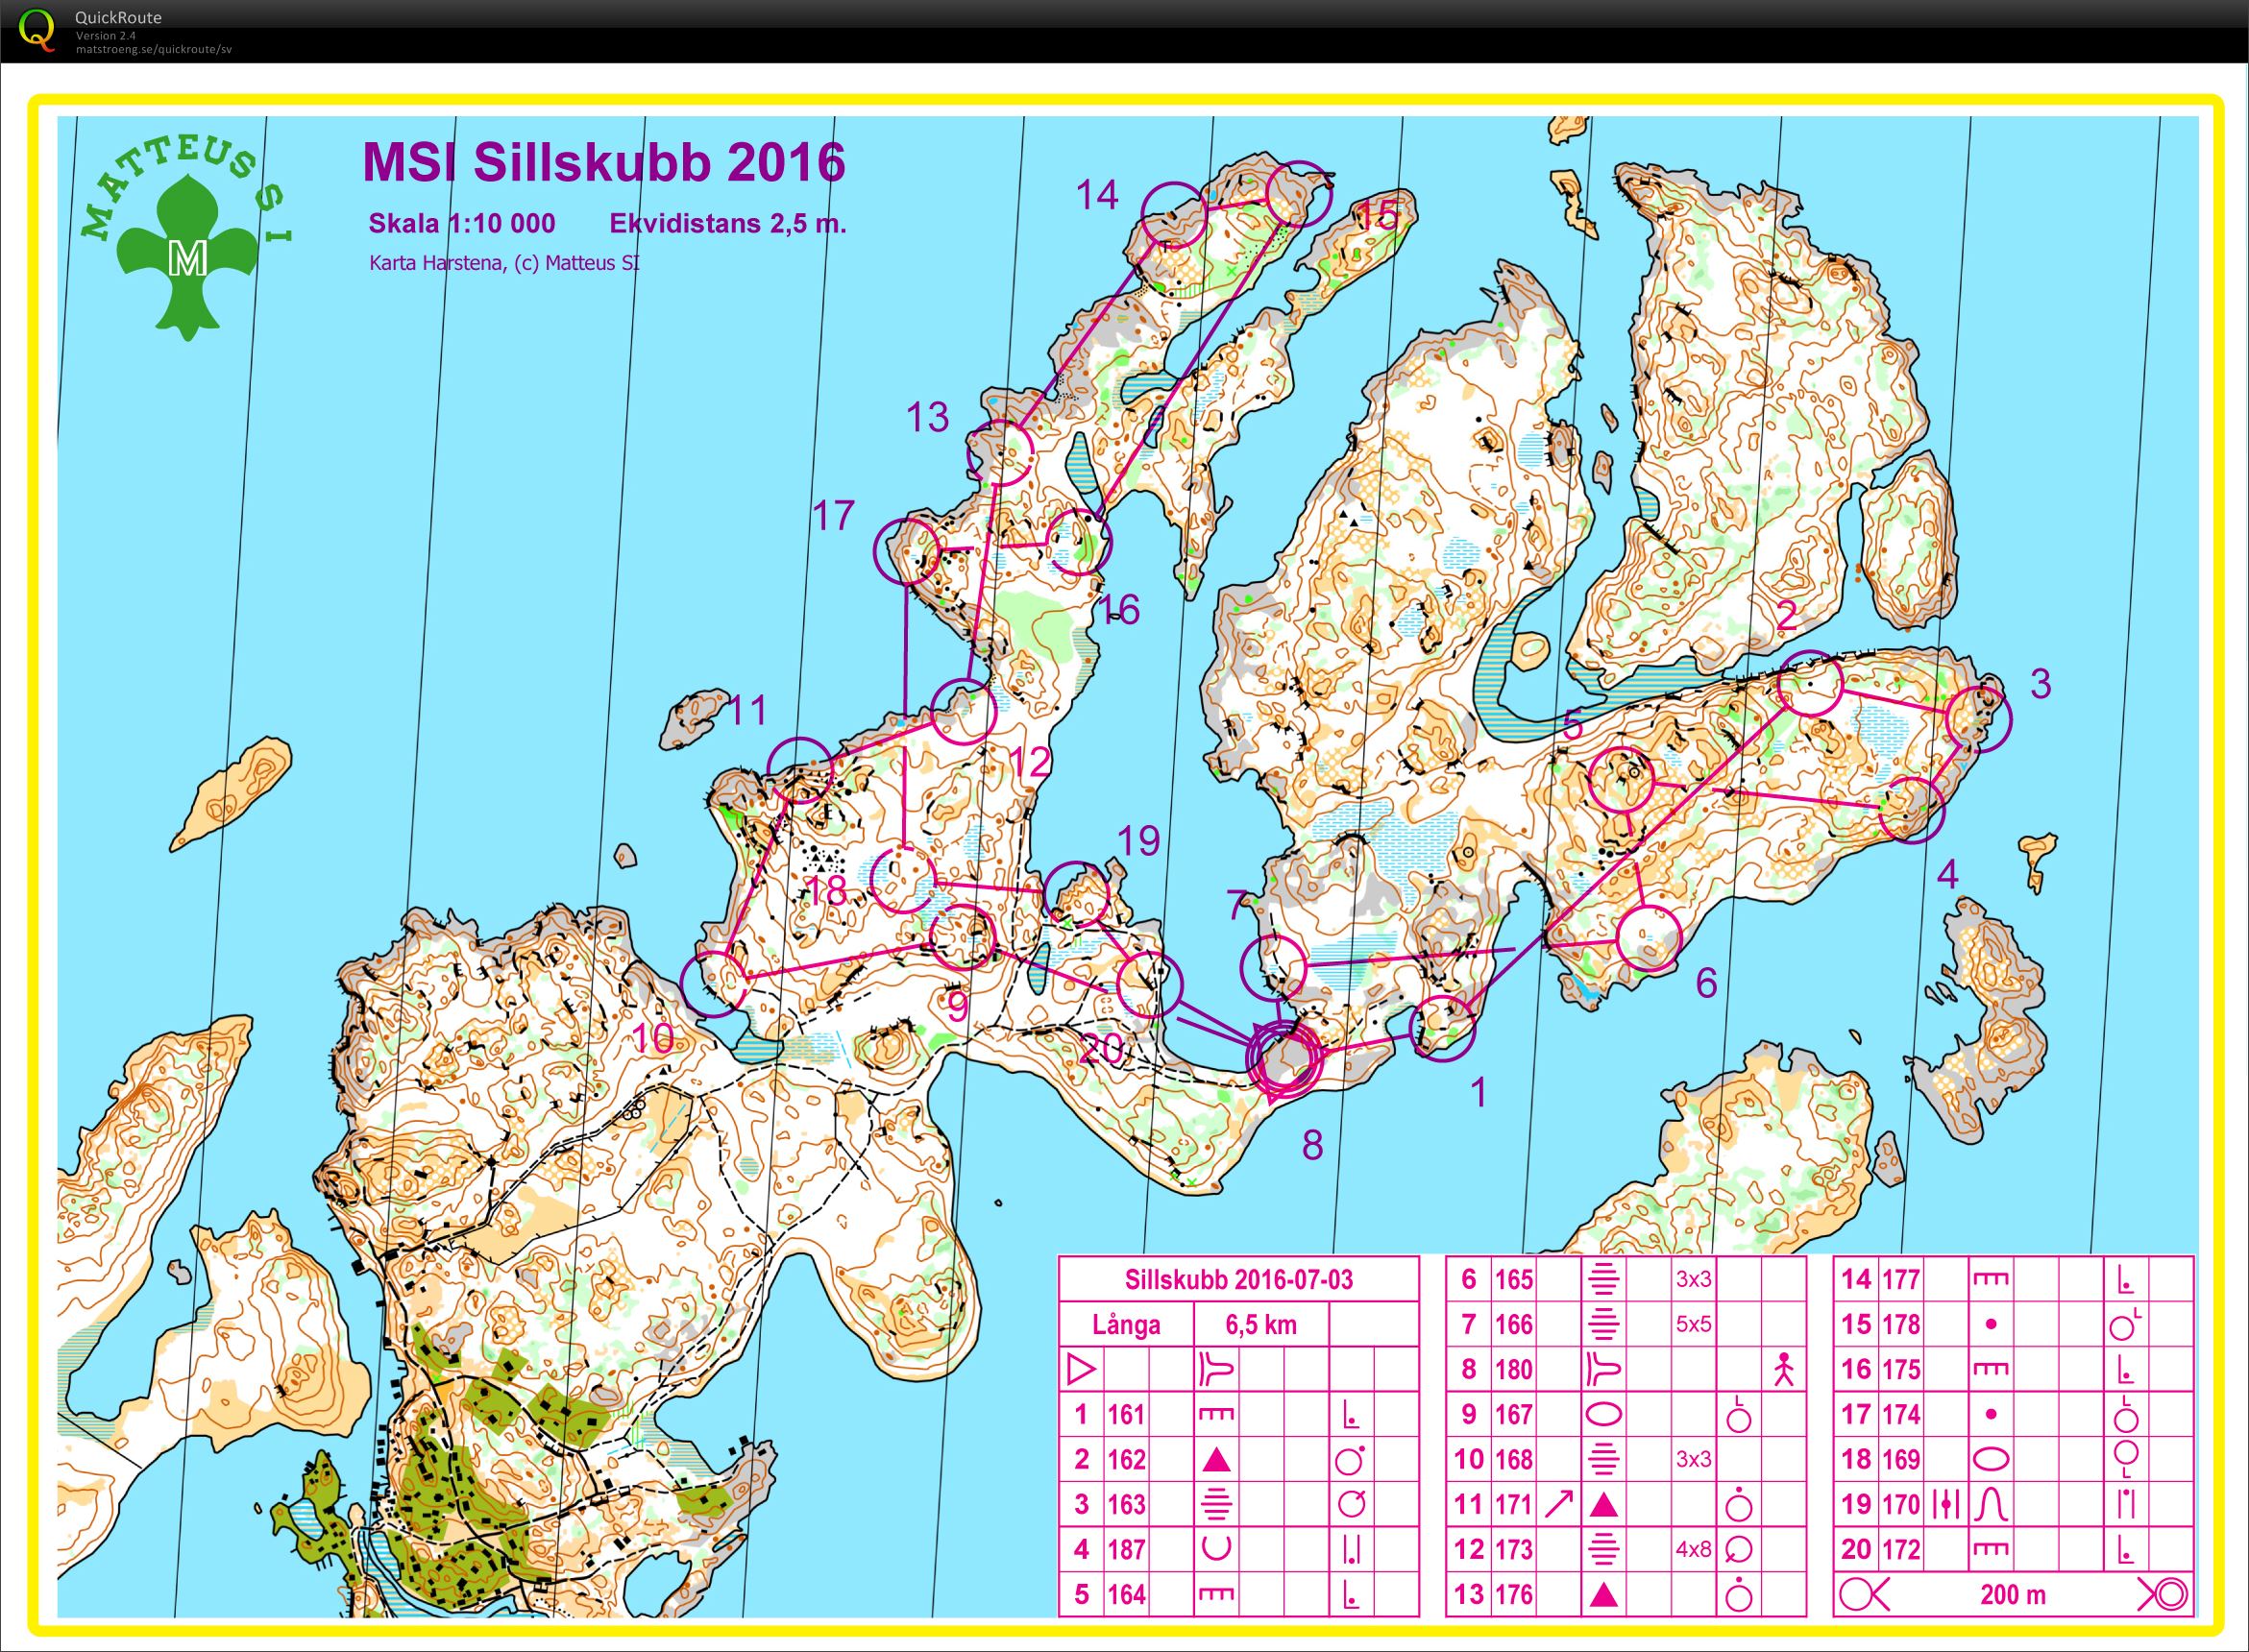 MSI Sillskubb 2016, Harstena (2016-07-03)